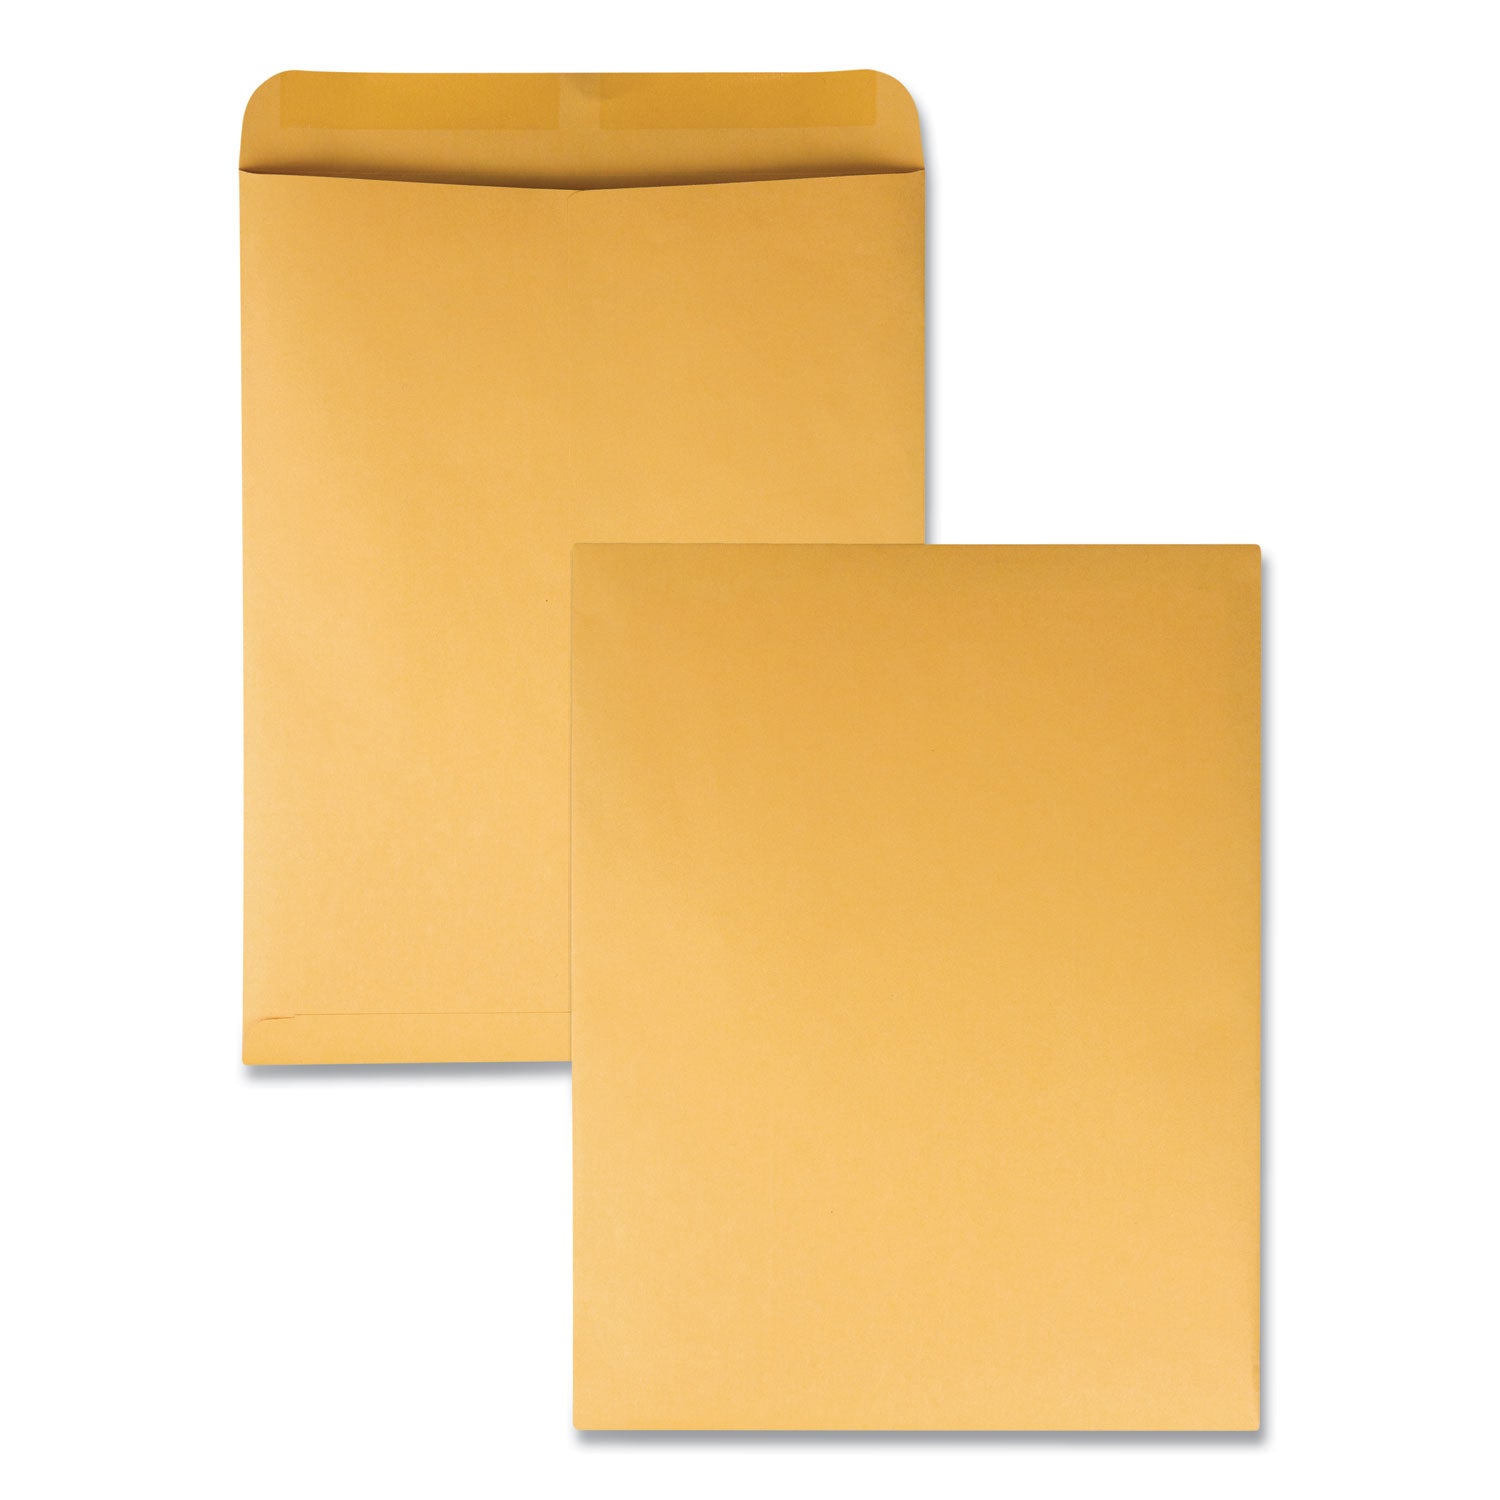 Catalog Envelope, 28 lb Bond Weight Kraft, #15 1/2, Square Flap, Gummed Closure, 12 x 15.5, Brown Kraft, 100/Box - 